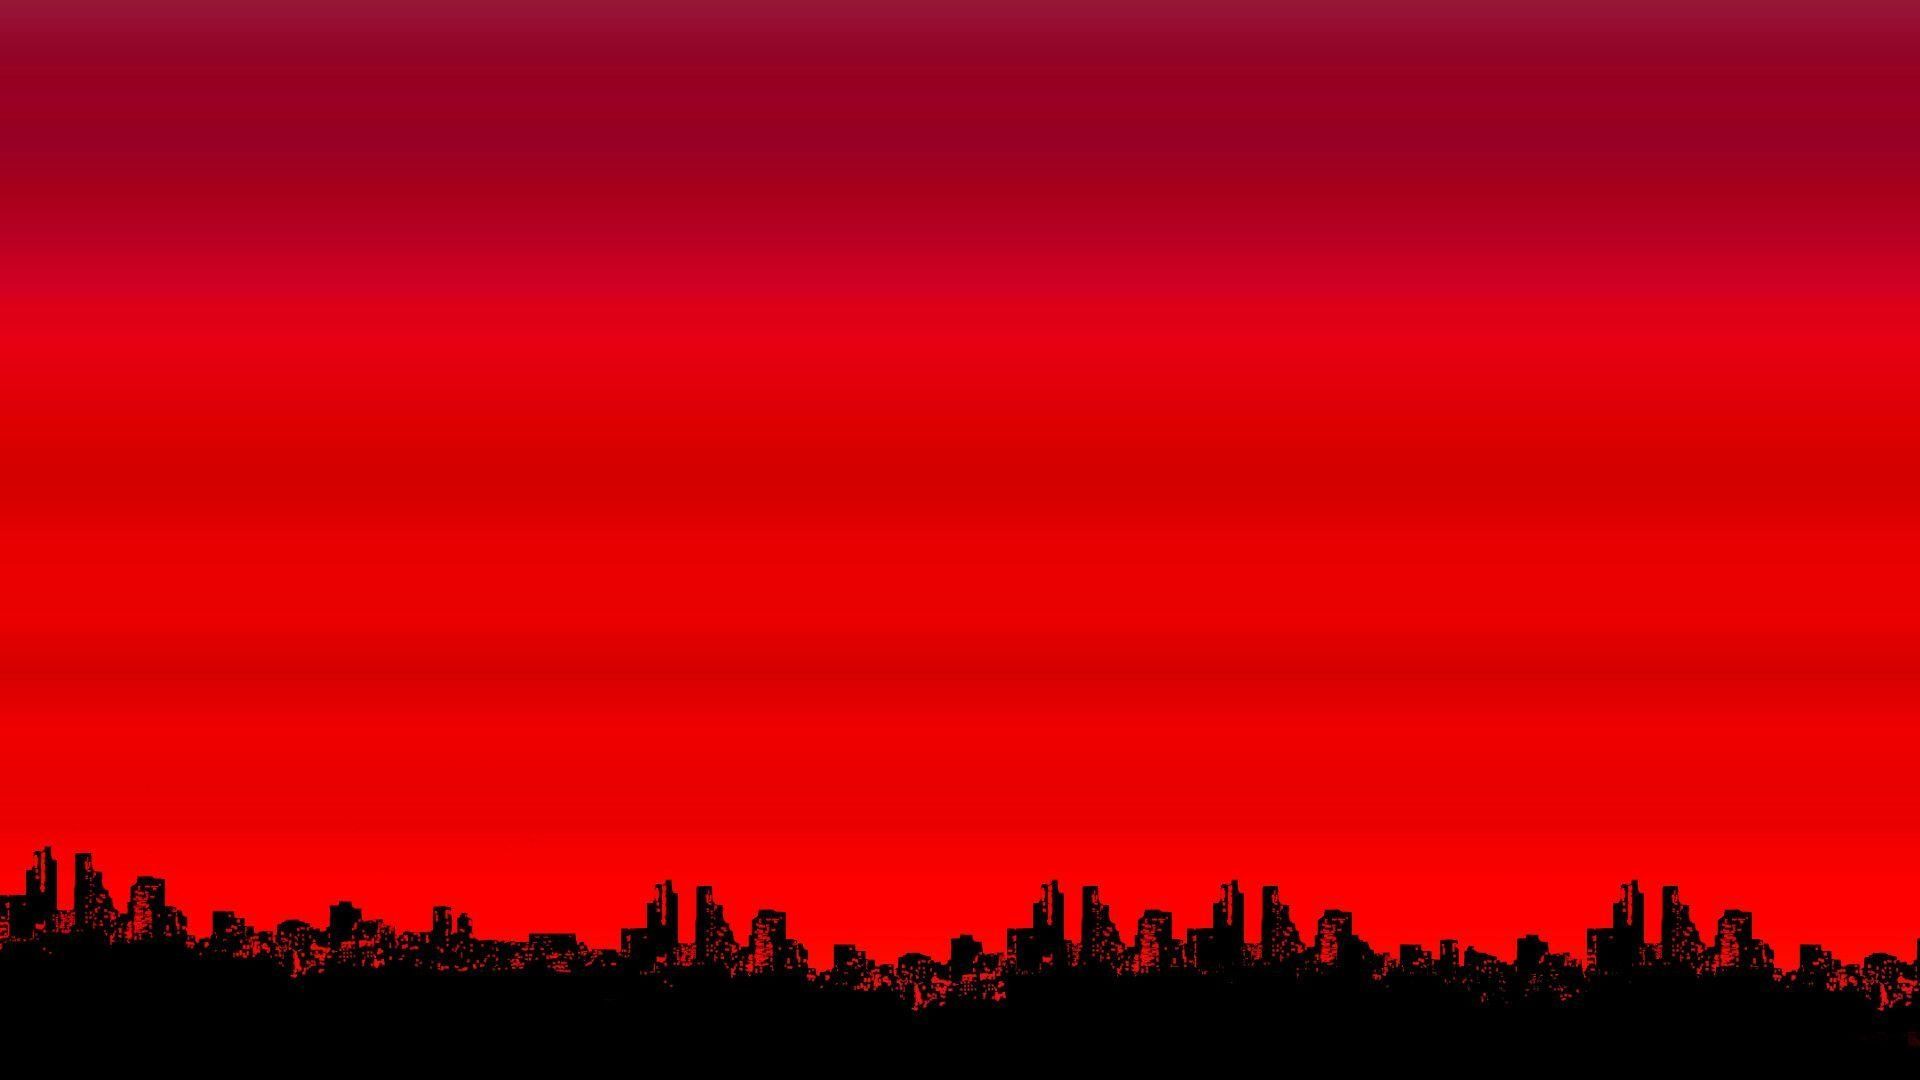 PC Hintergrundbild 1920x1080. Red and Black Aesthetic Computer Wallpaper